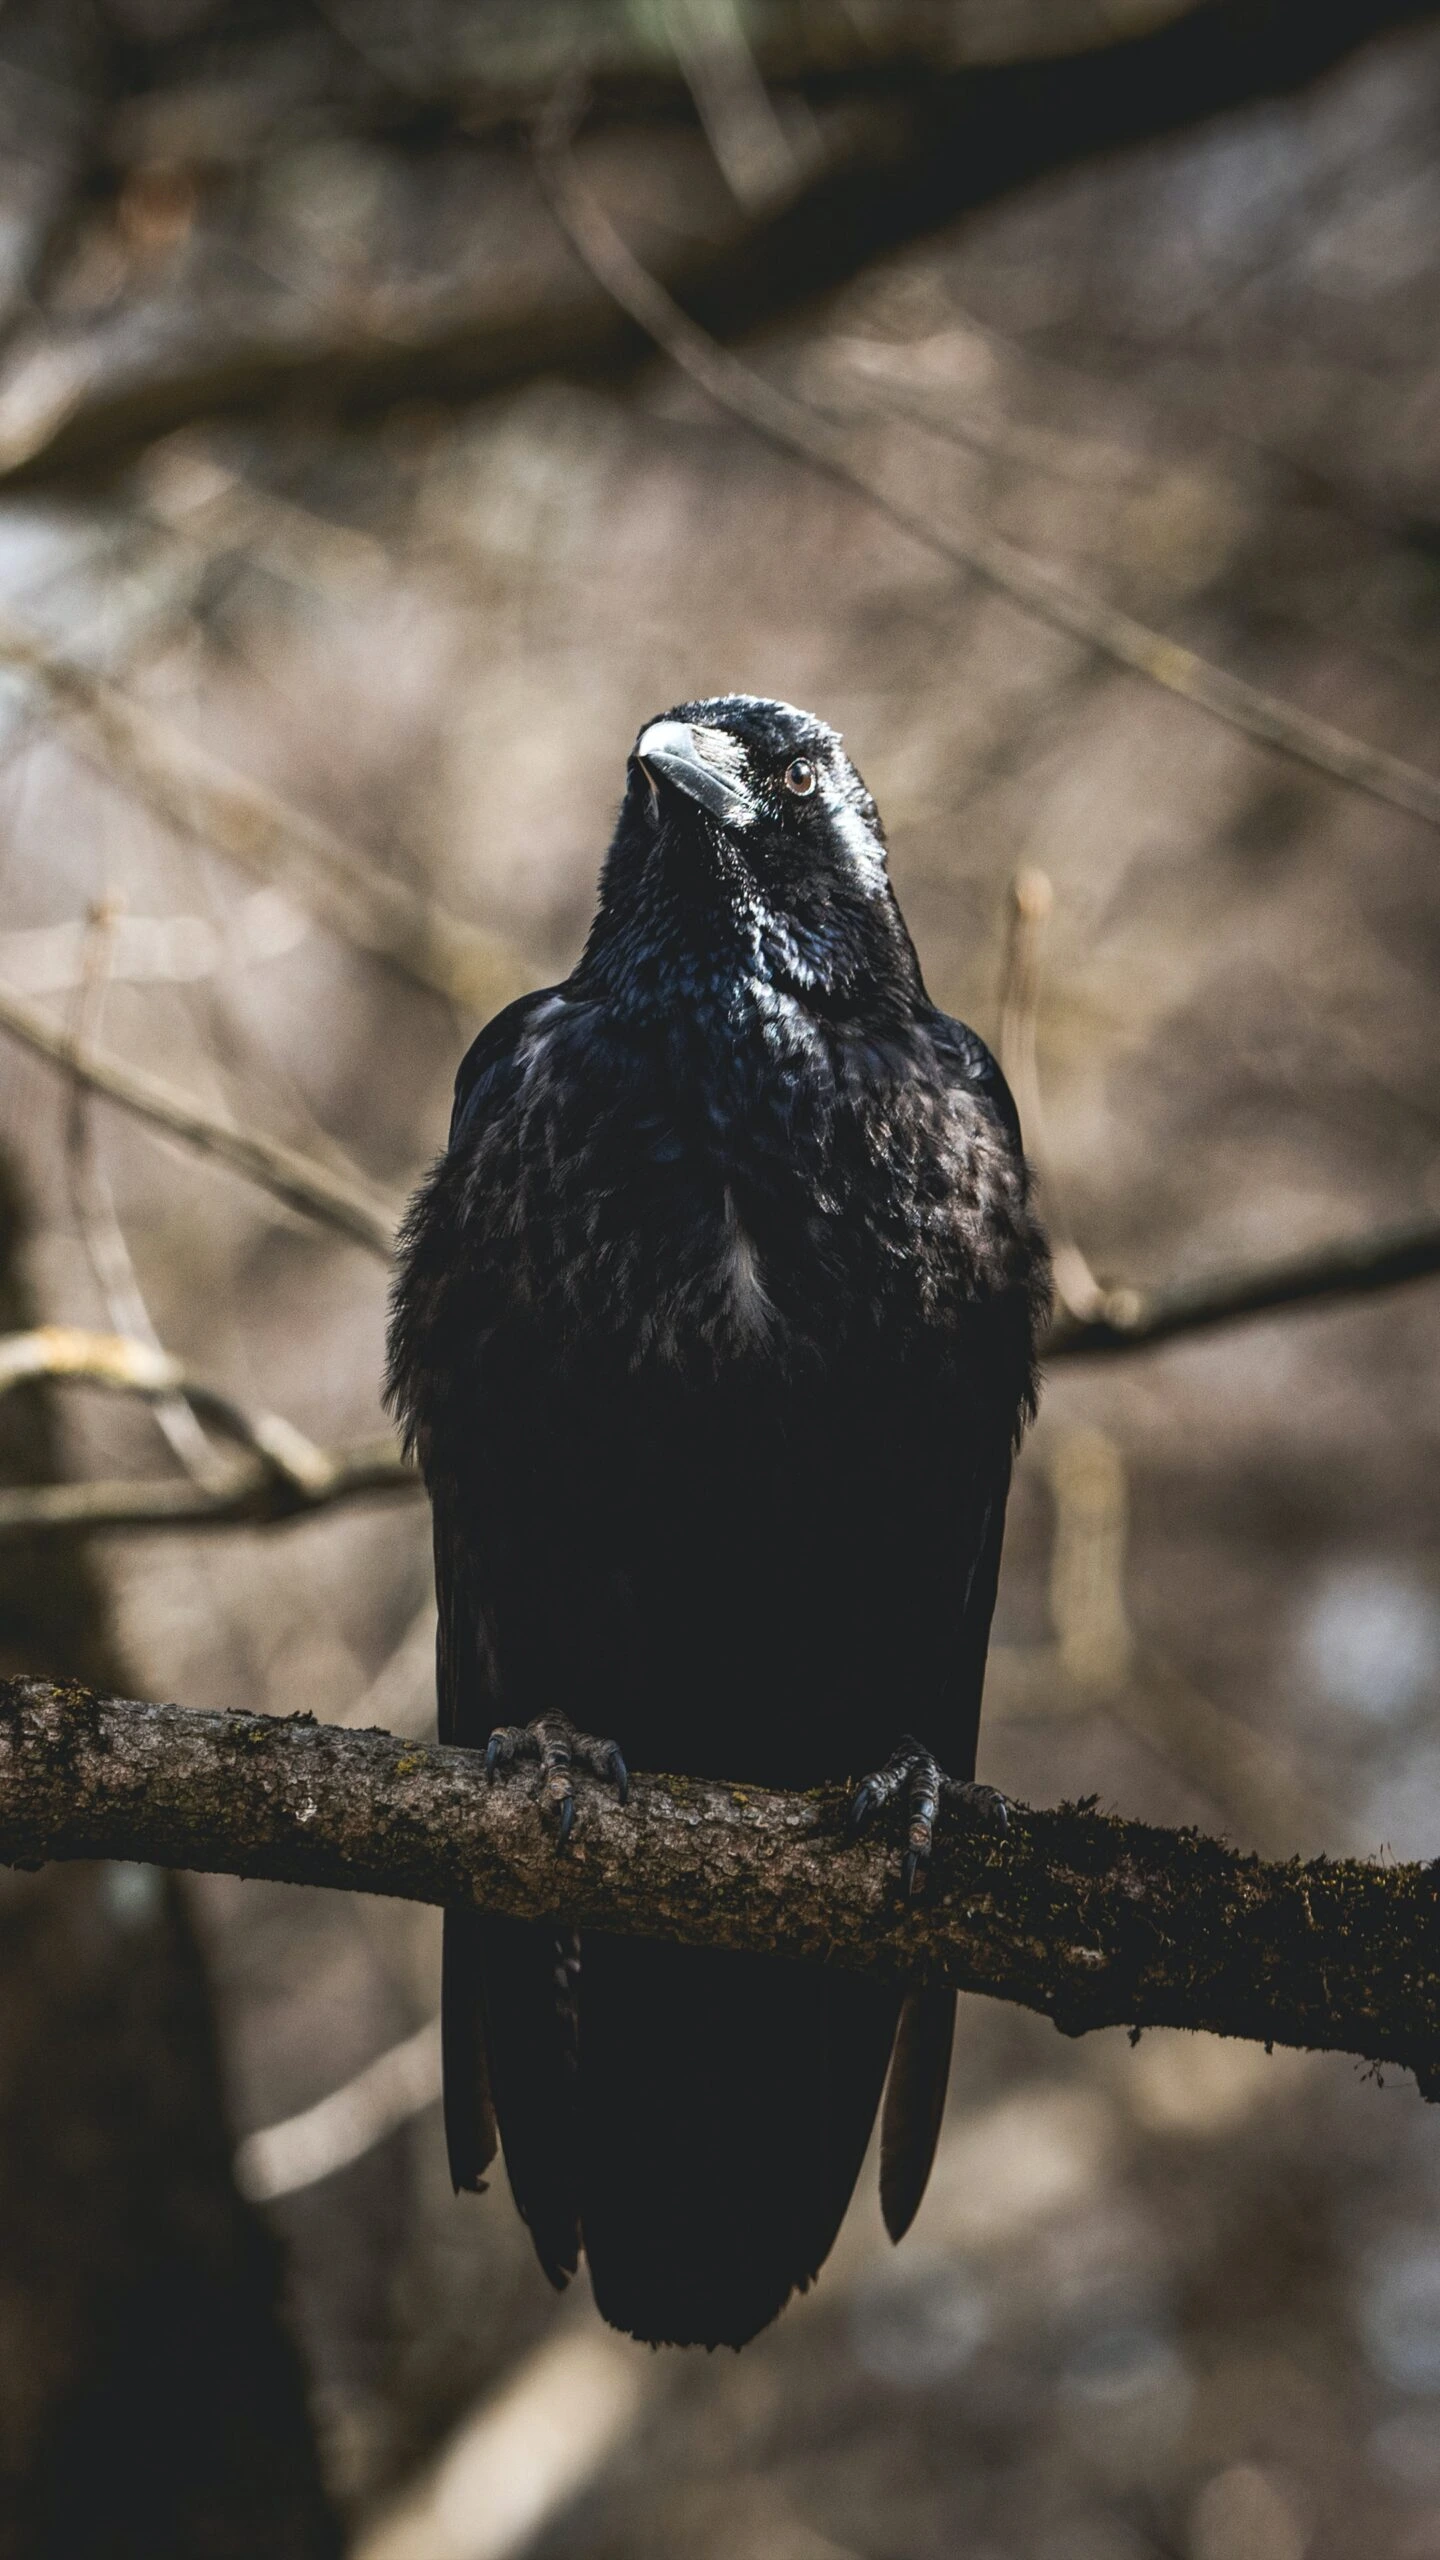 valentin-petkov-Raven perched on a tree branch-unsplash-scaled